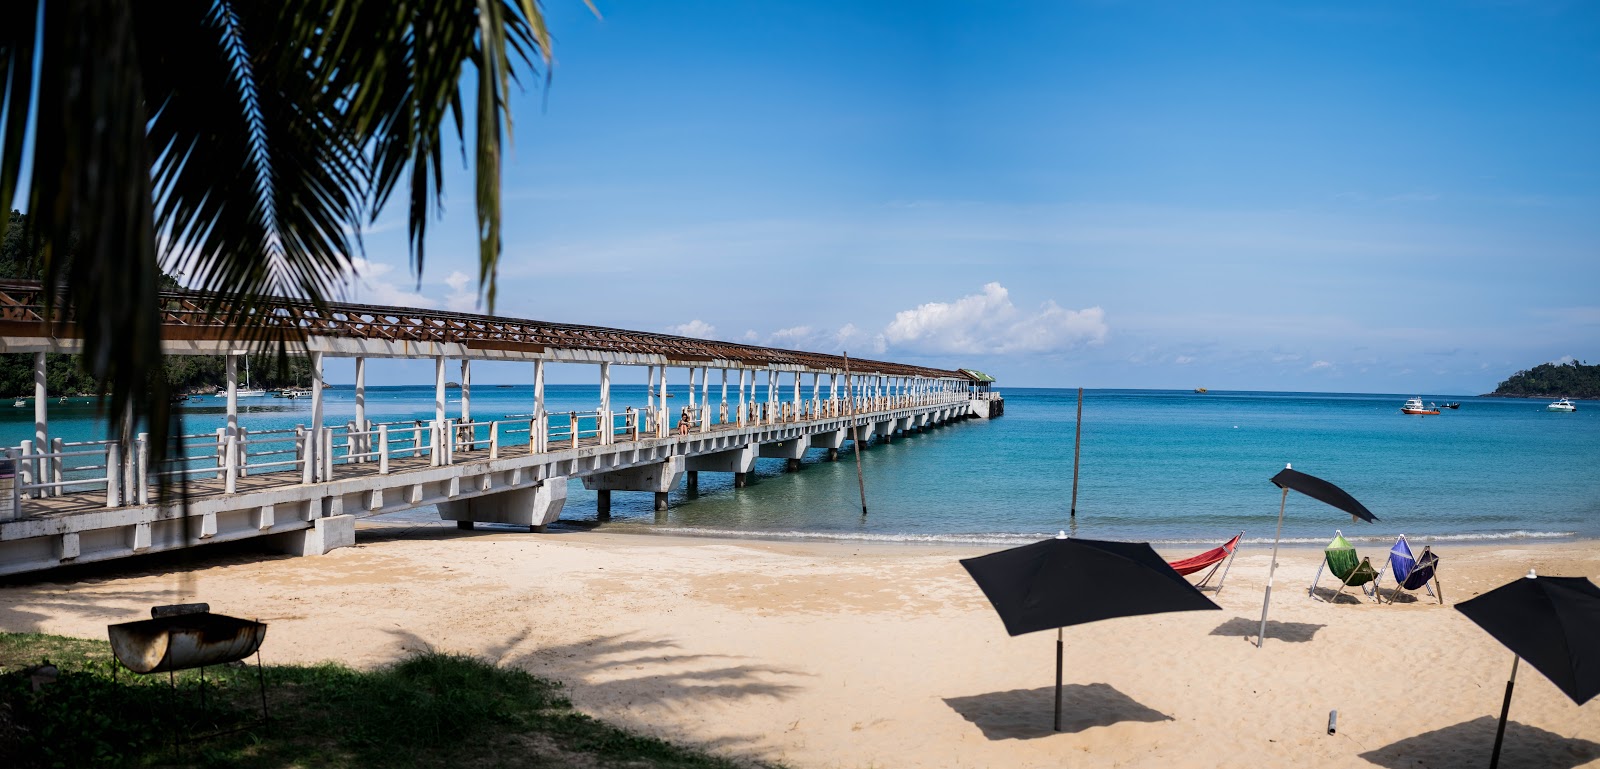 Photo of Juara Beach partly hotel area